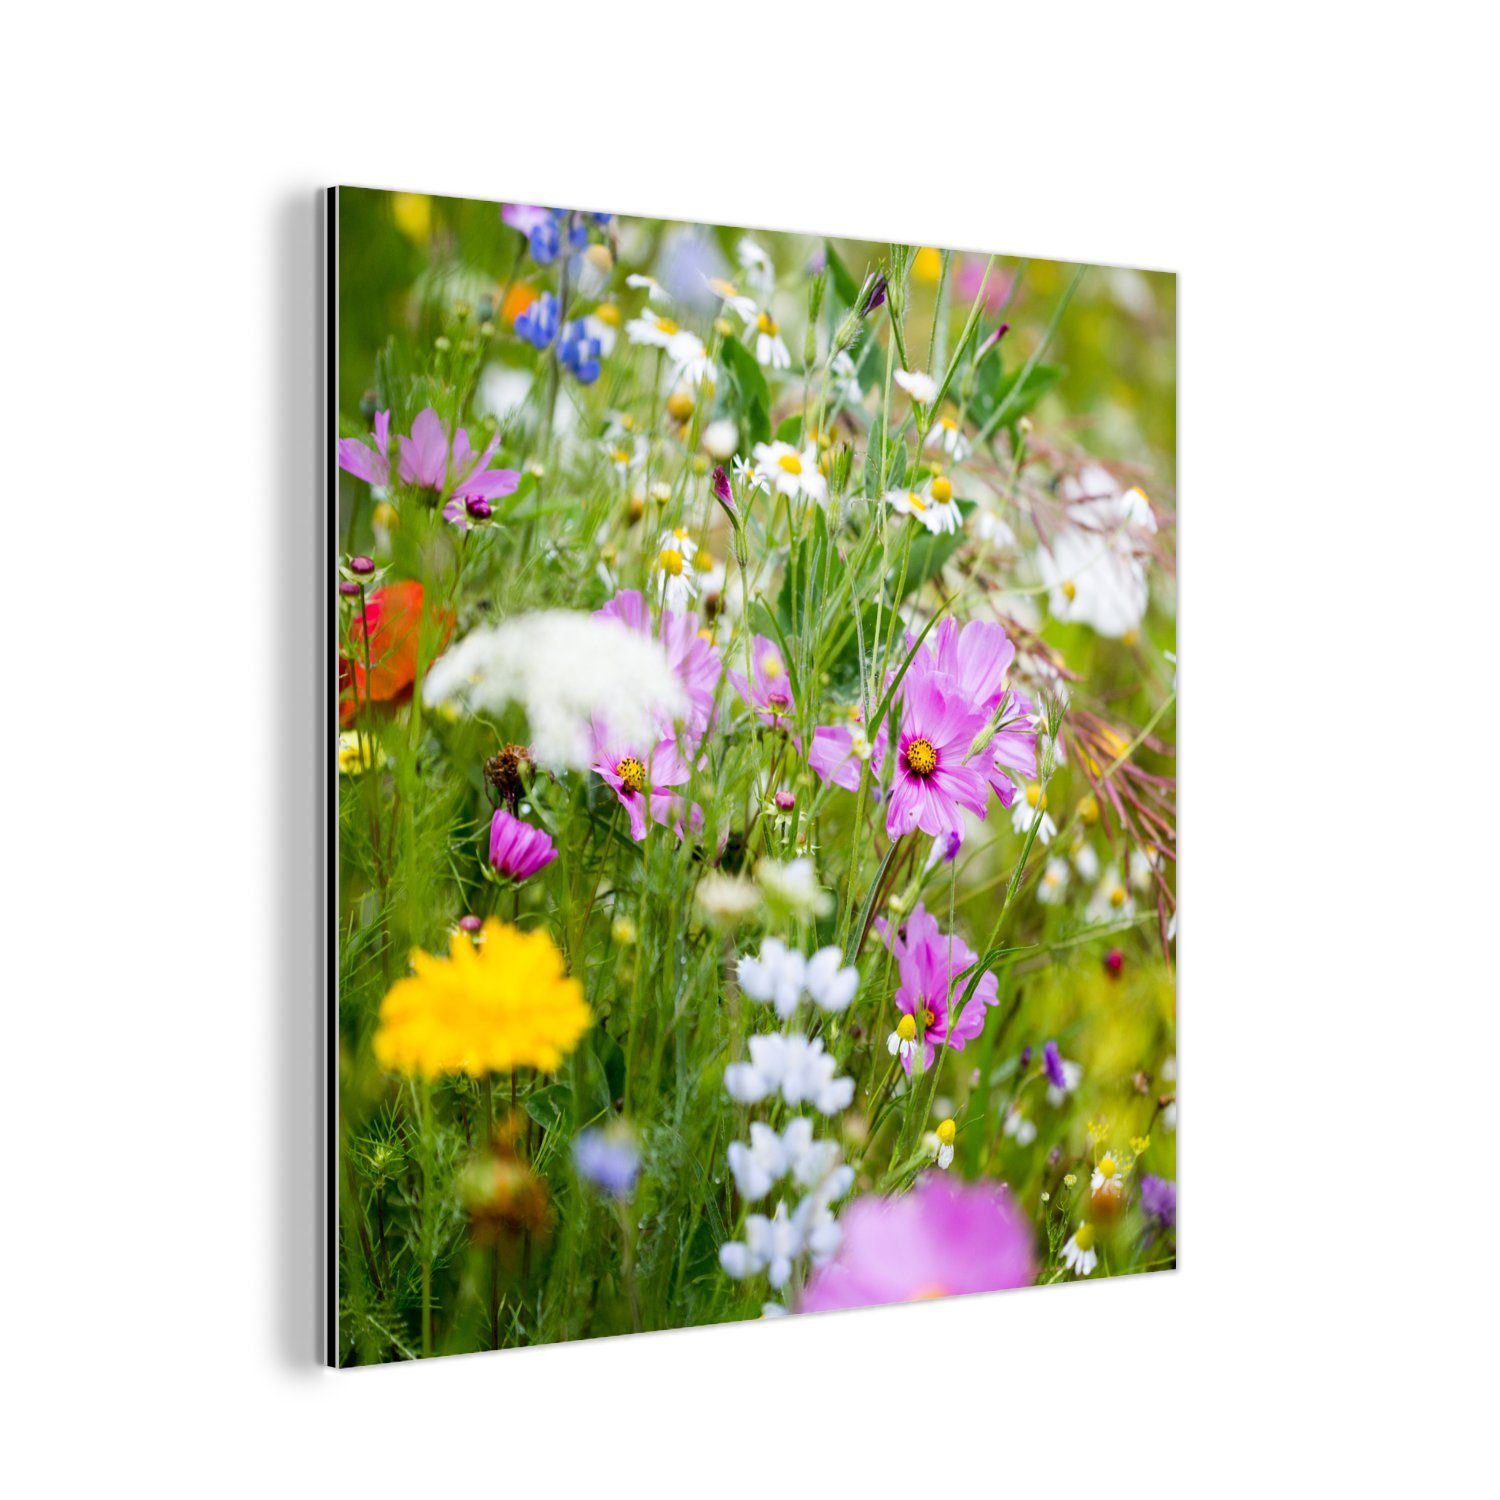 MuchoWow Metallbild Blumen - Natur - Grün - Gras - Lila - Weiß, (1 St), Alu-Dibond-Druck, Gemälde aus Metall, Aluminium deko